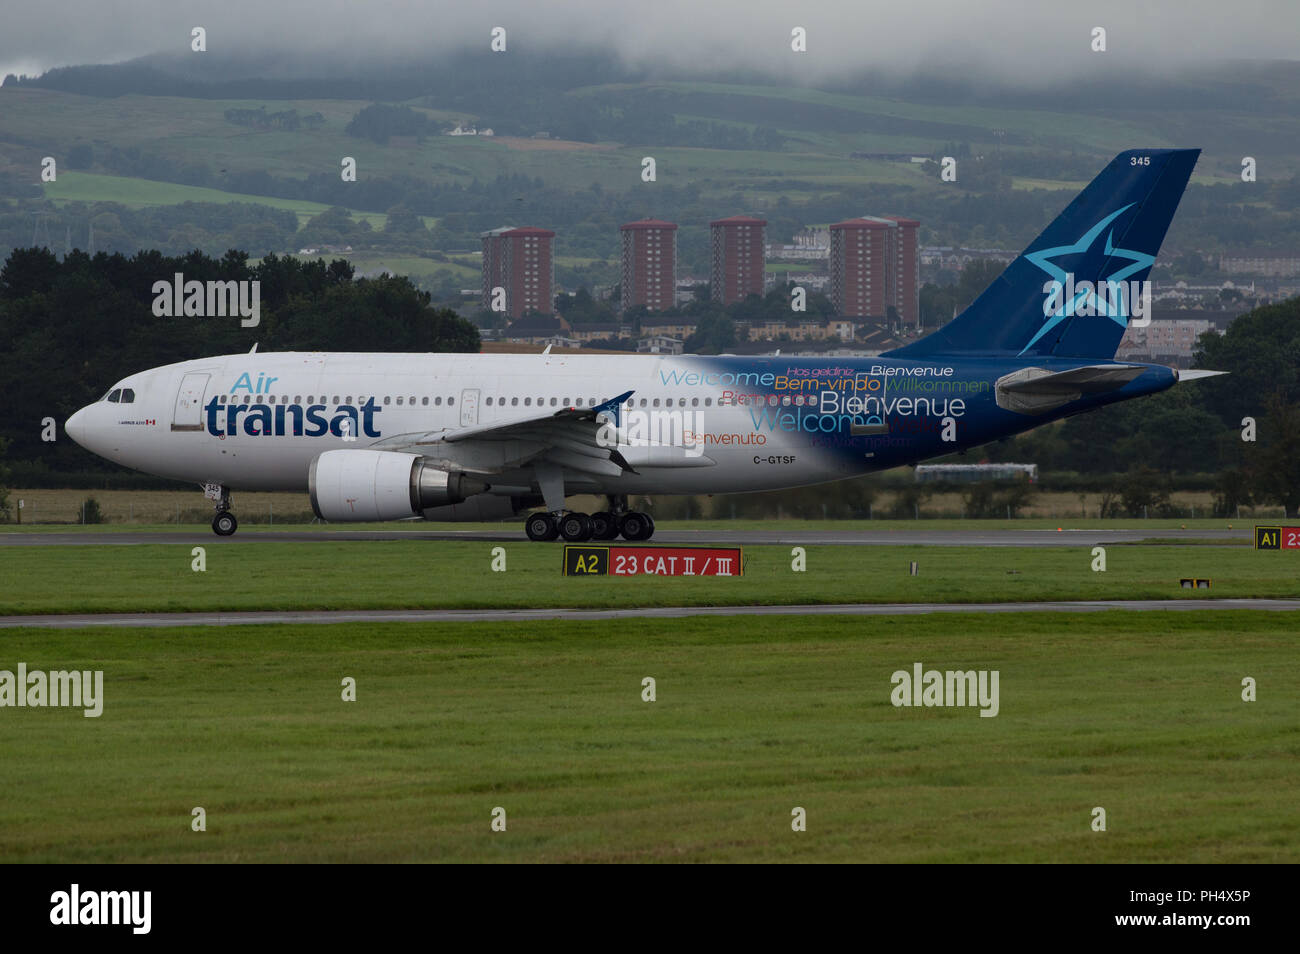 Air Transat flight across the pond departs Glasgow International Airport, Renfrewshire, Scotland - 28th August 2017 Stock Photo